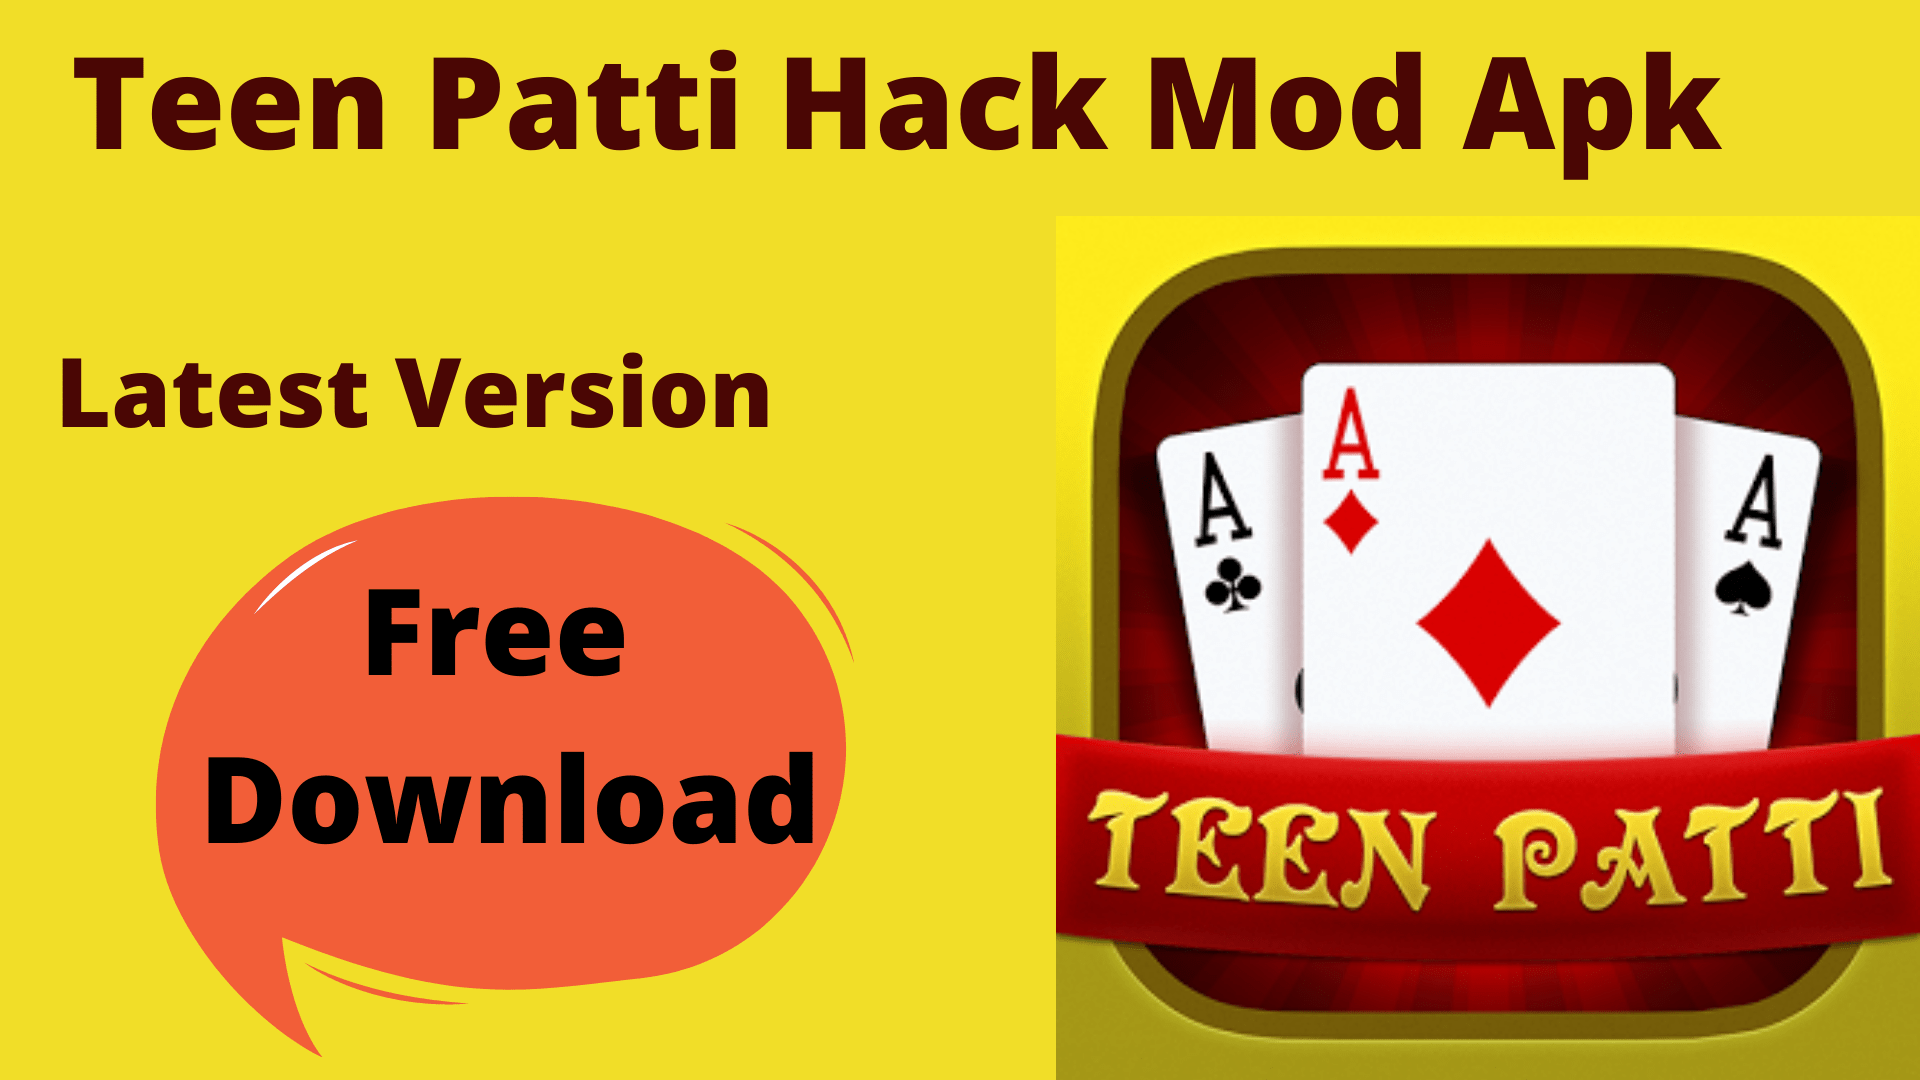 Teen Patti Hack Mod Apk Latest Version